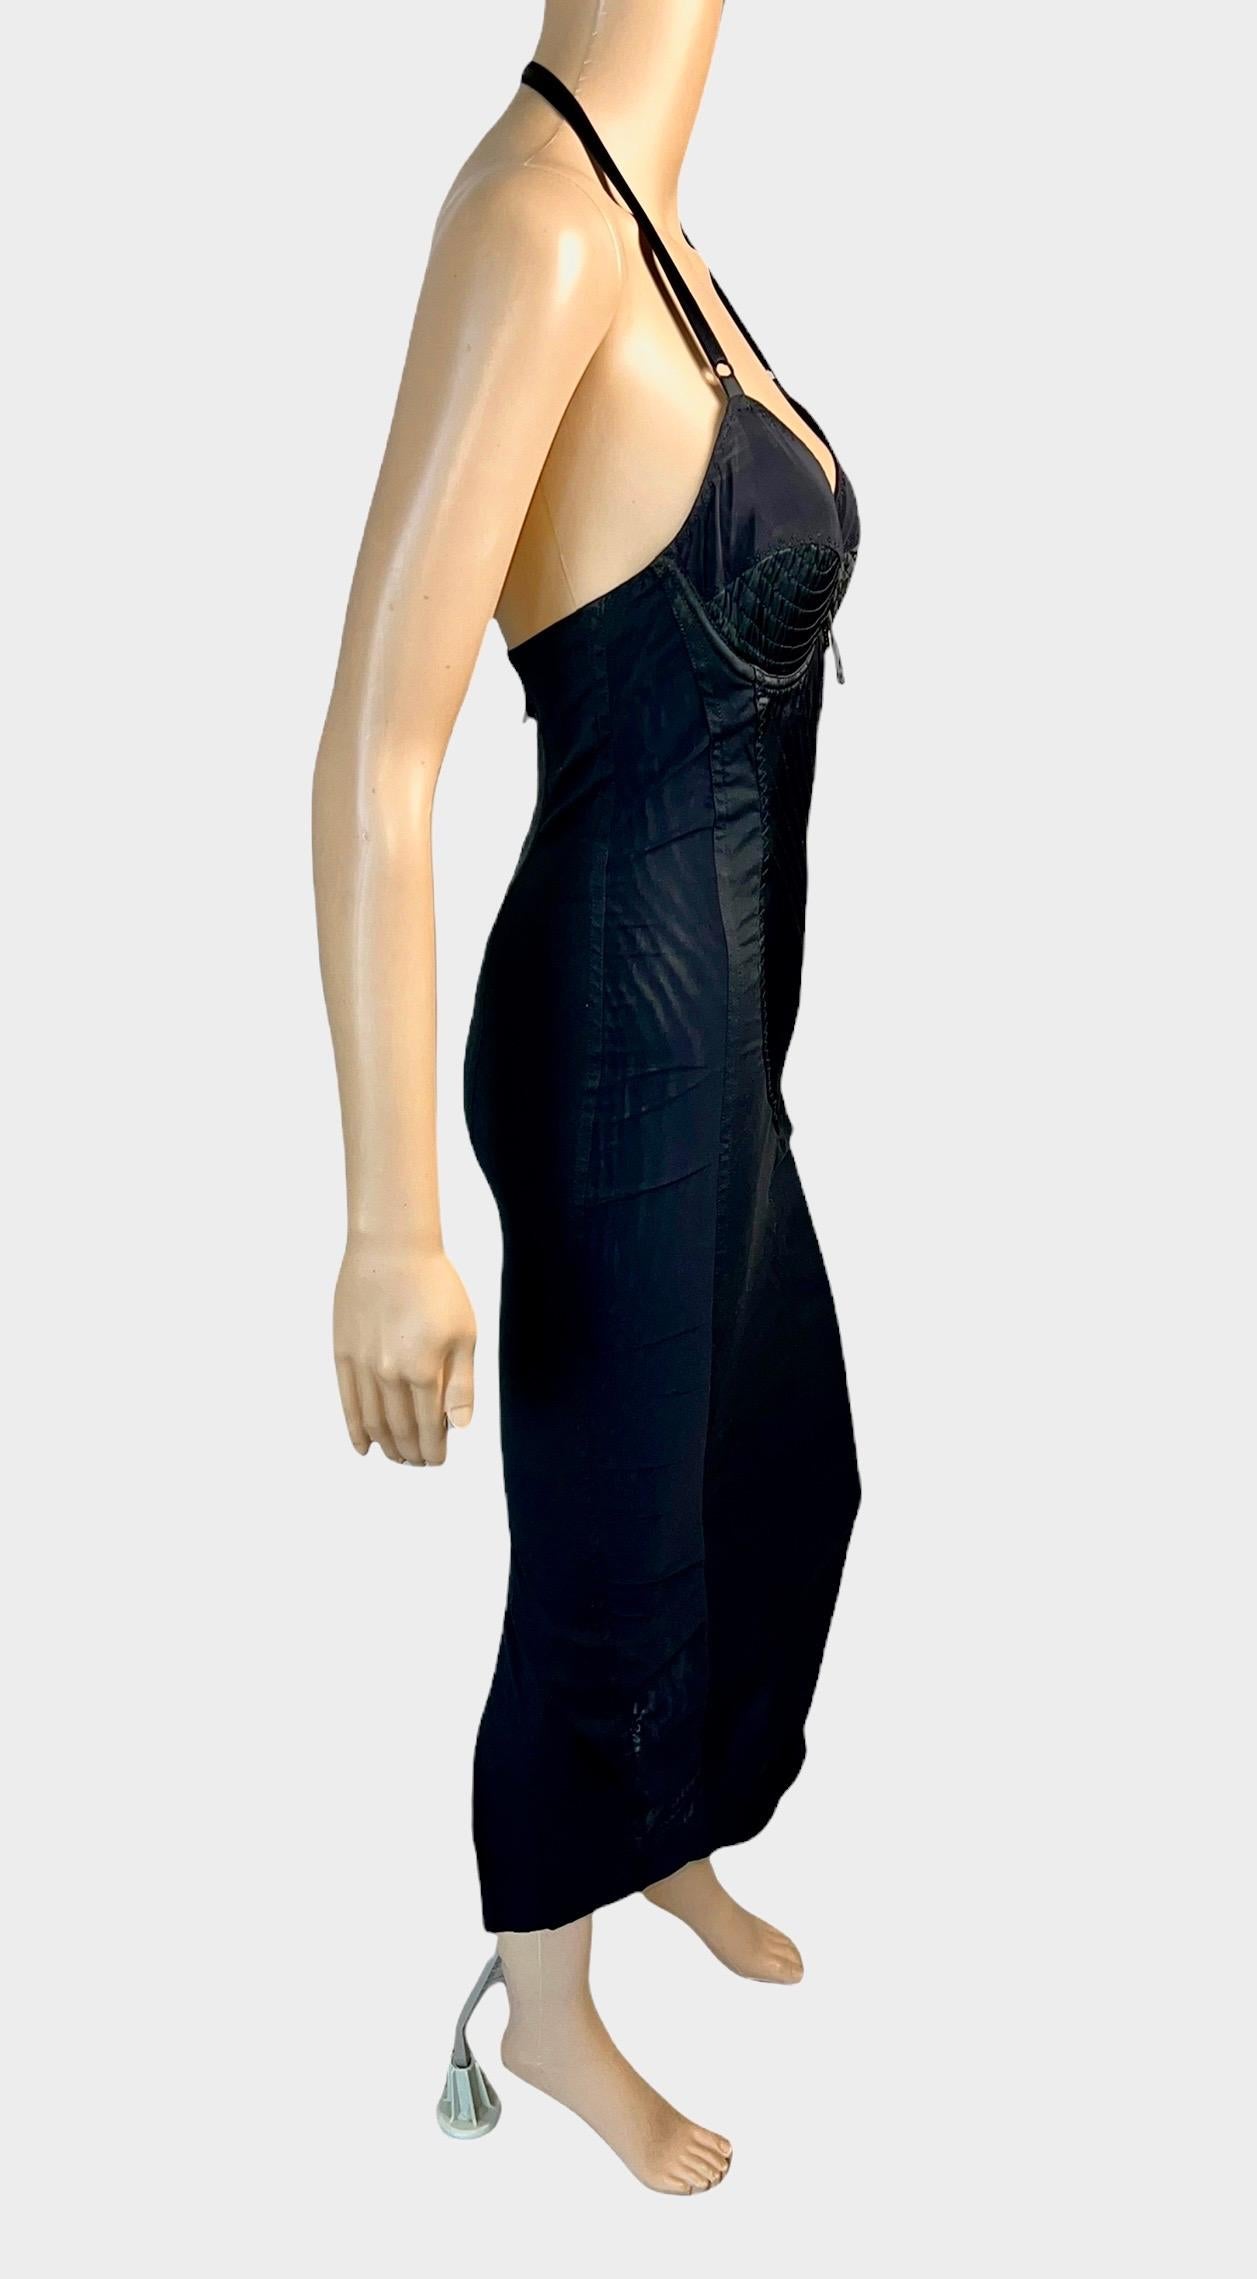 Jean Paul Gaultier 1990's Vintage Cone Bra Corset Bondage Black Evening Dress 5